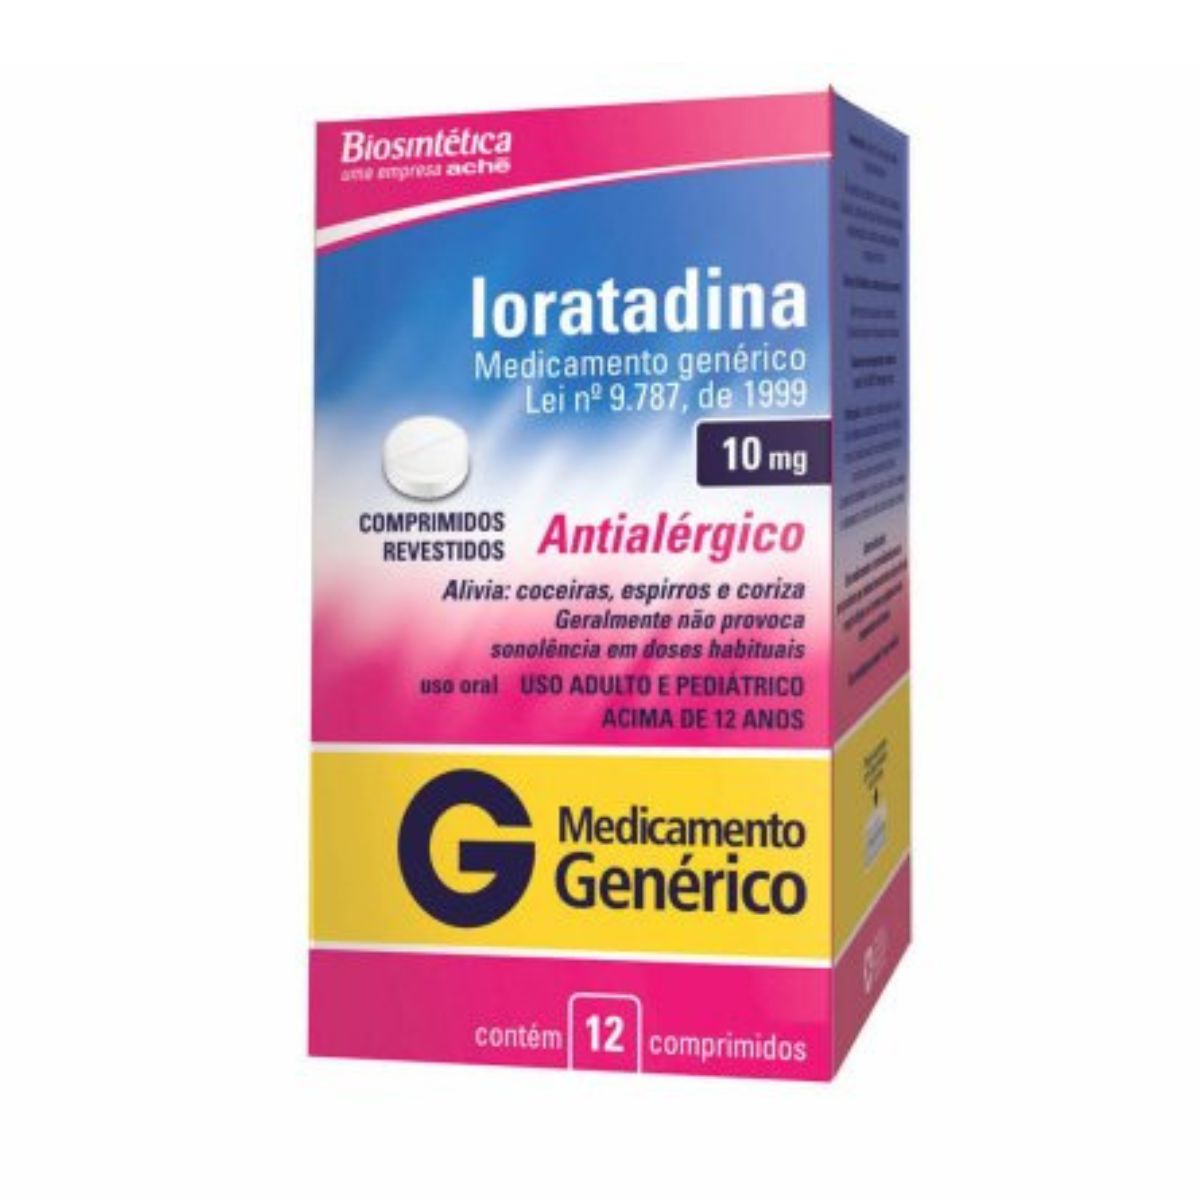 antialergico-loratadina-10mg-ache-biosintetica-com-12-comprimidos-1.jpg